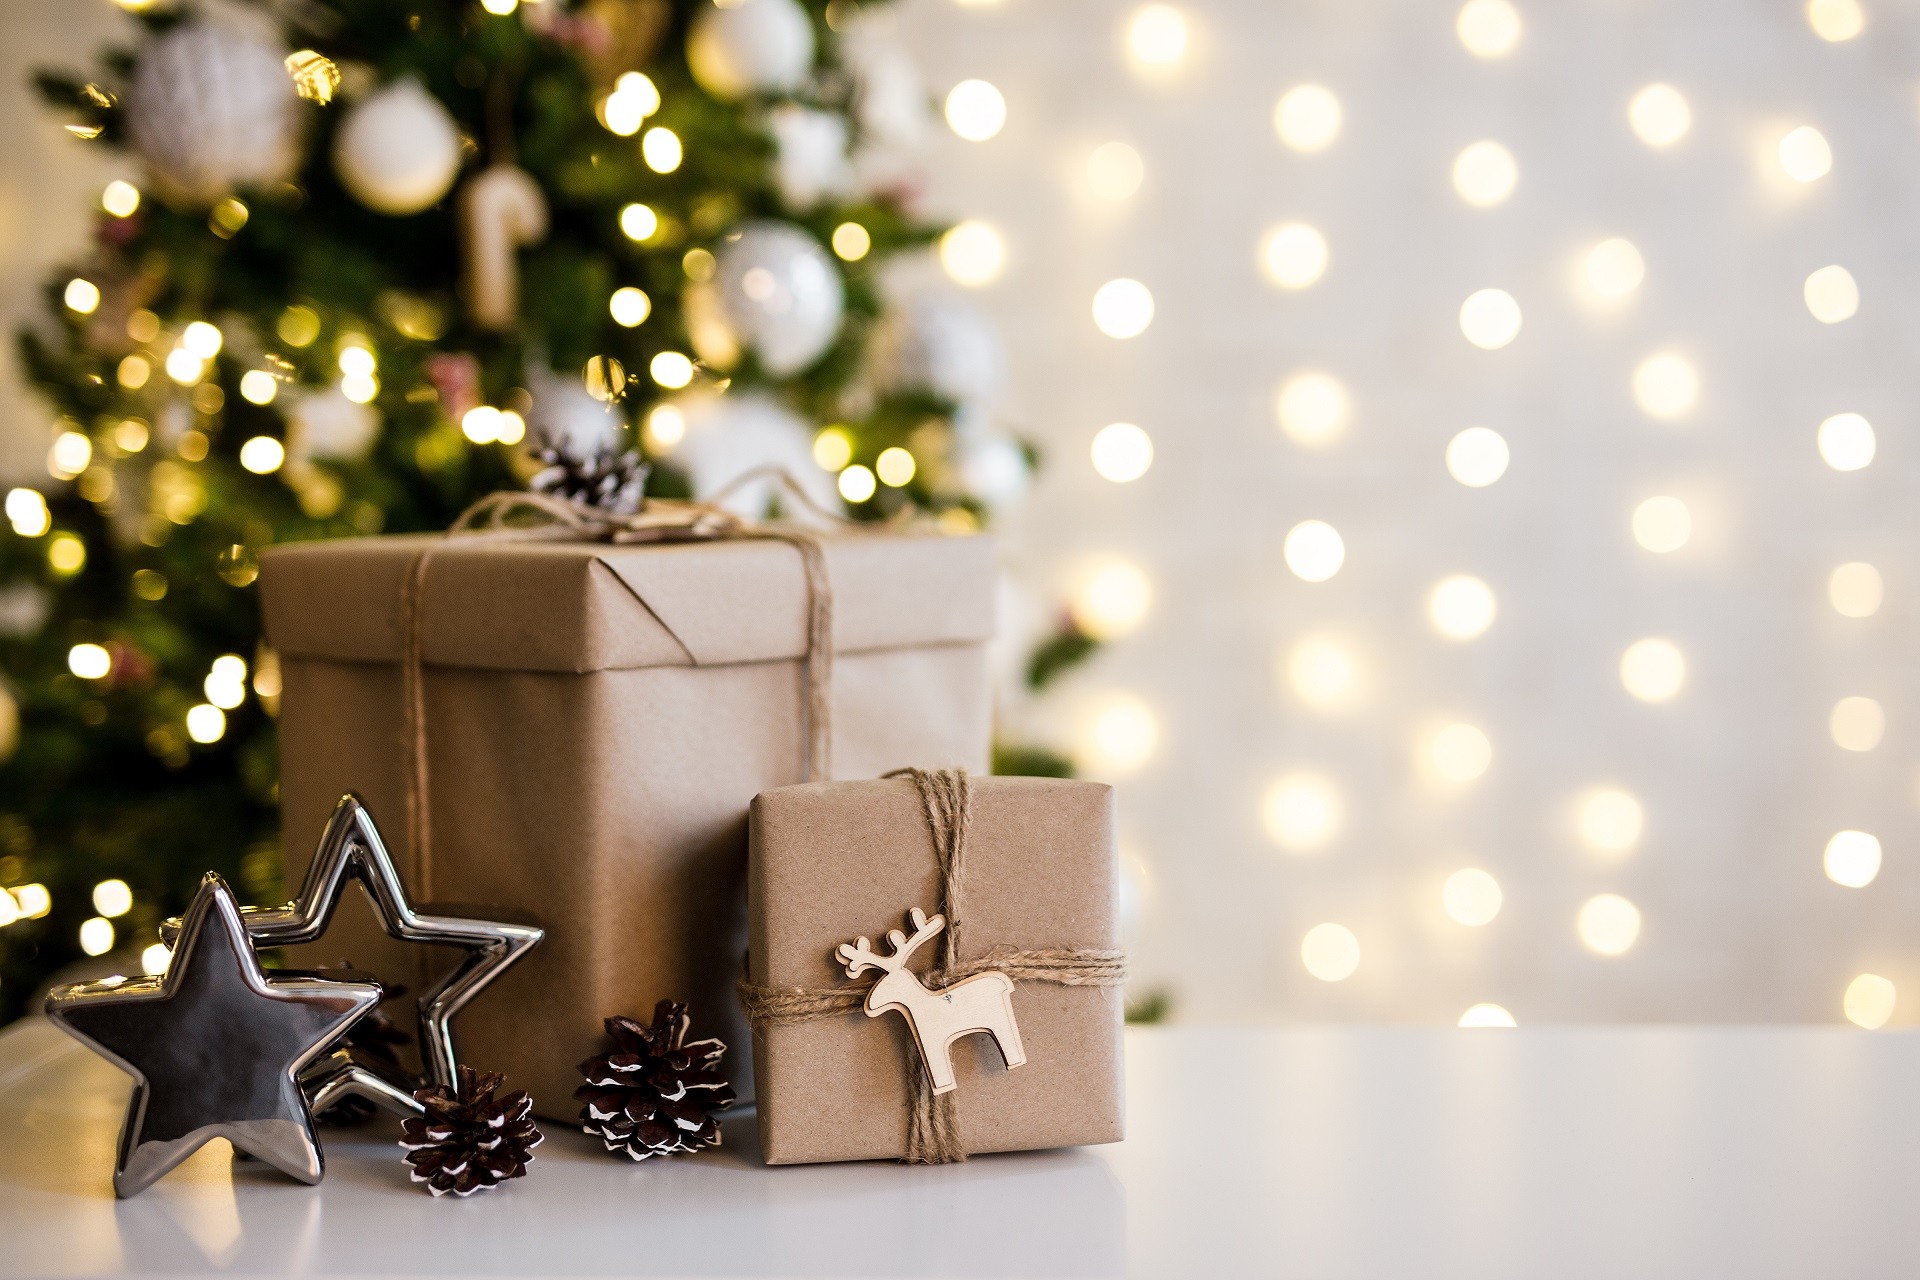 7 Great Tips for Saving on Christmas Gifts